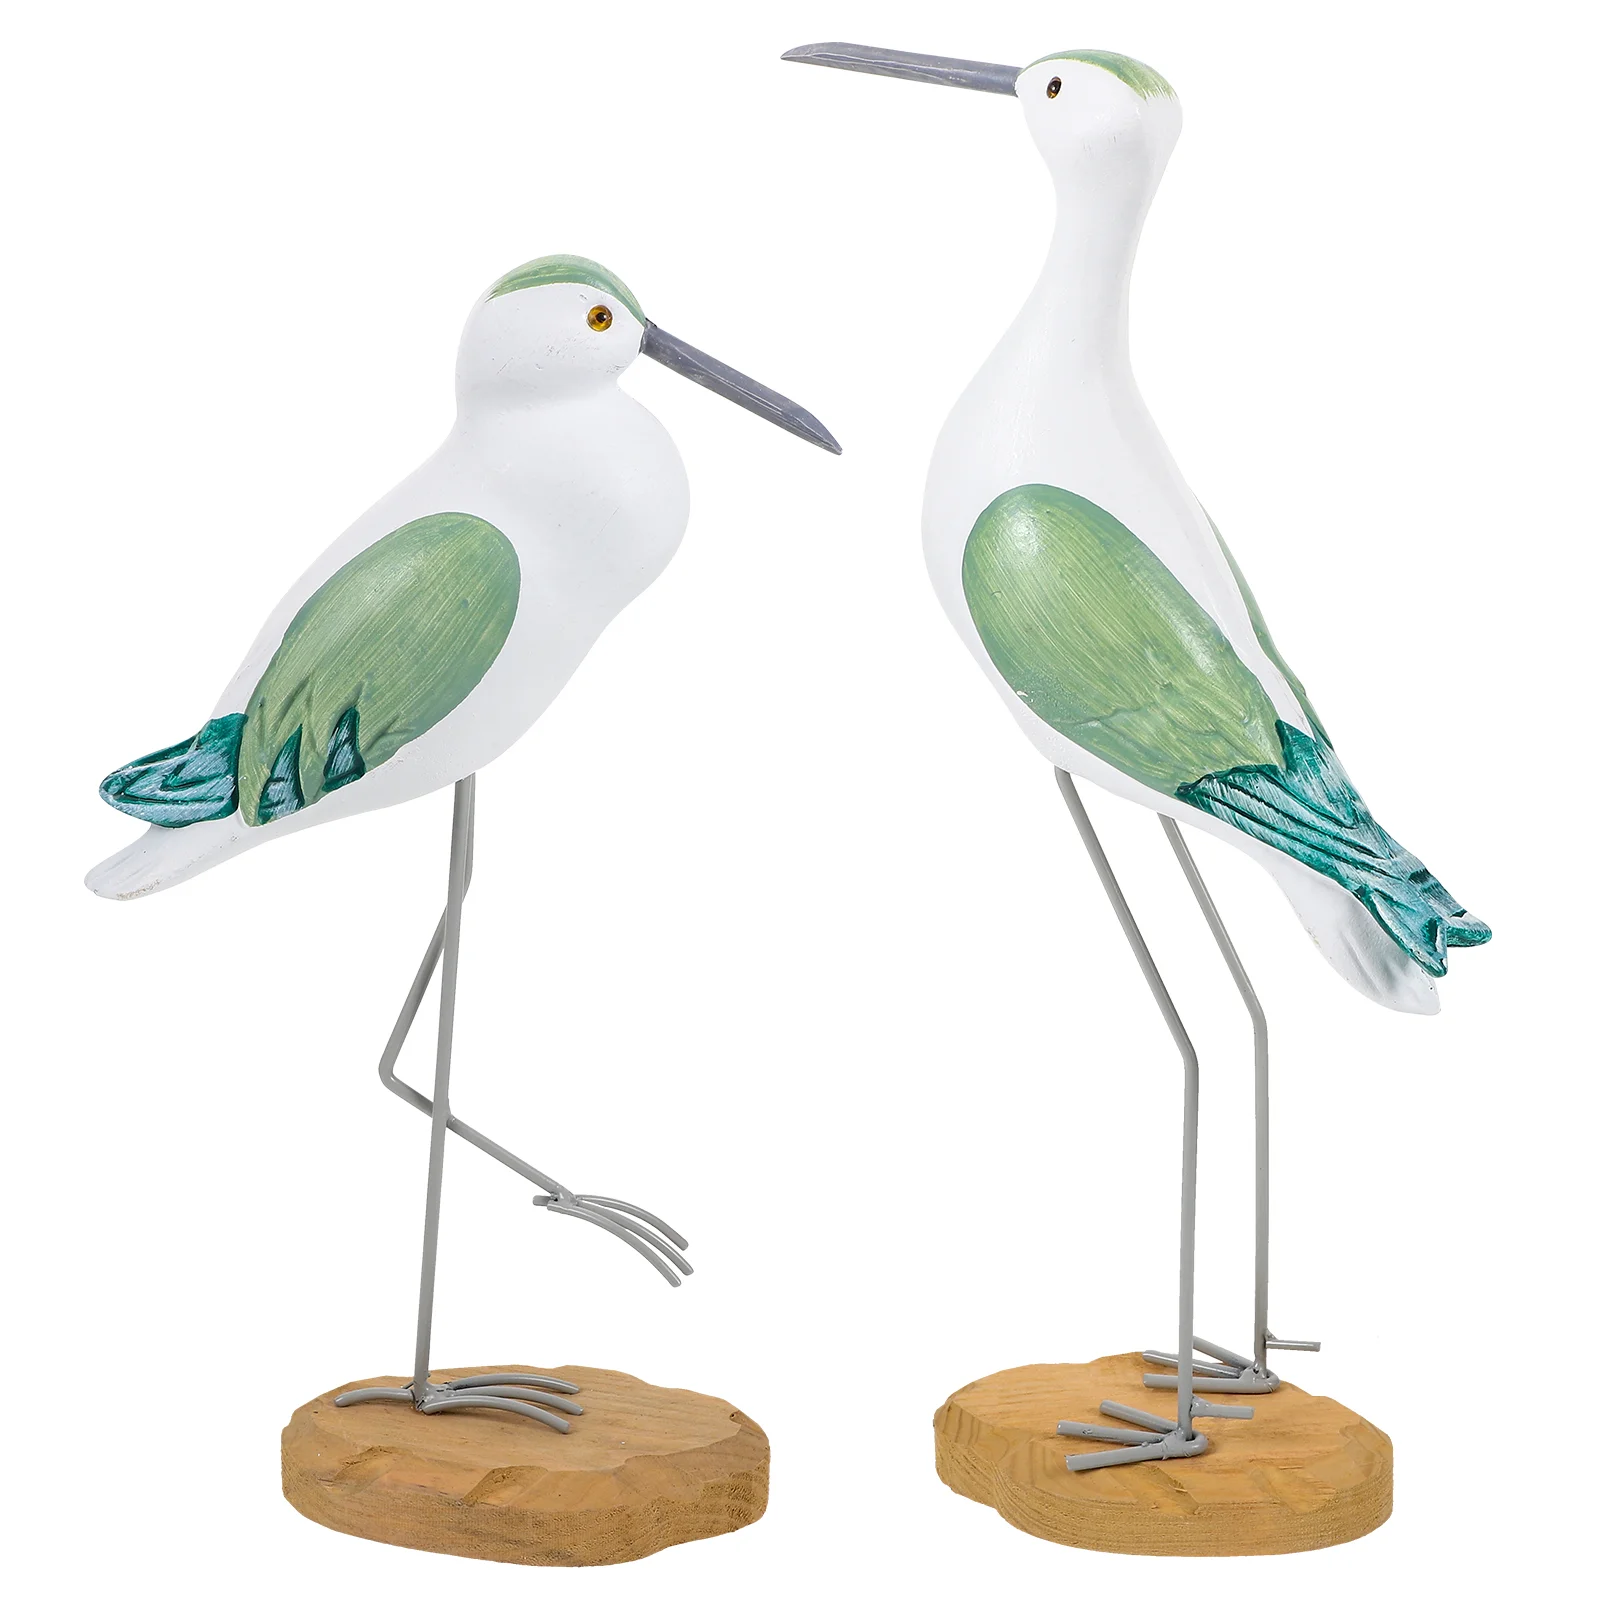 

Imikeya Seagull Ornaments Outdoor Home Decor Tv Stand Desktop Coastal Beach Bird Statue Seaside Ocean Wooden Craft